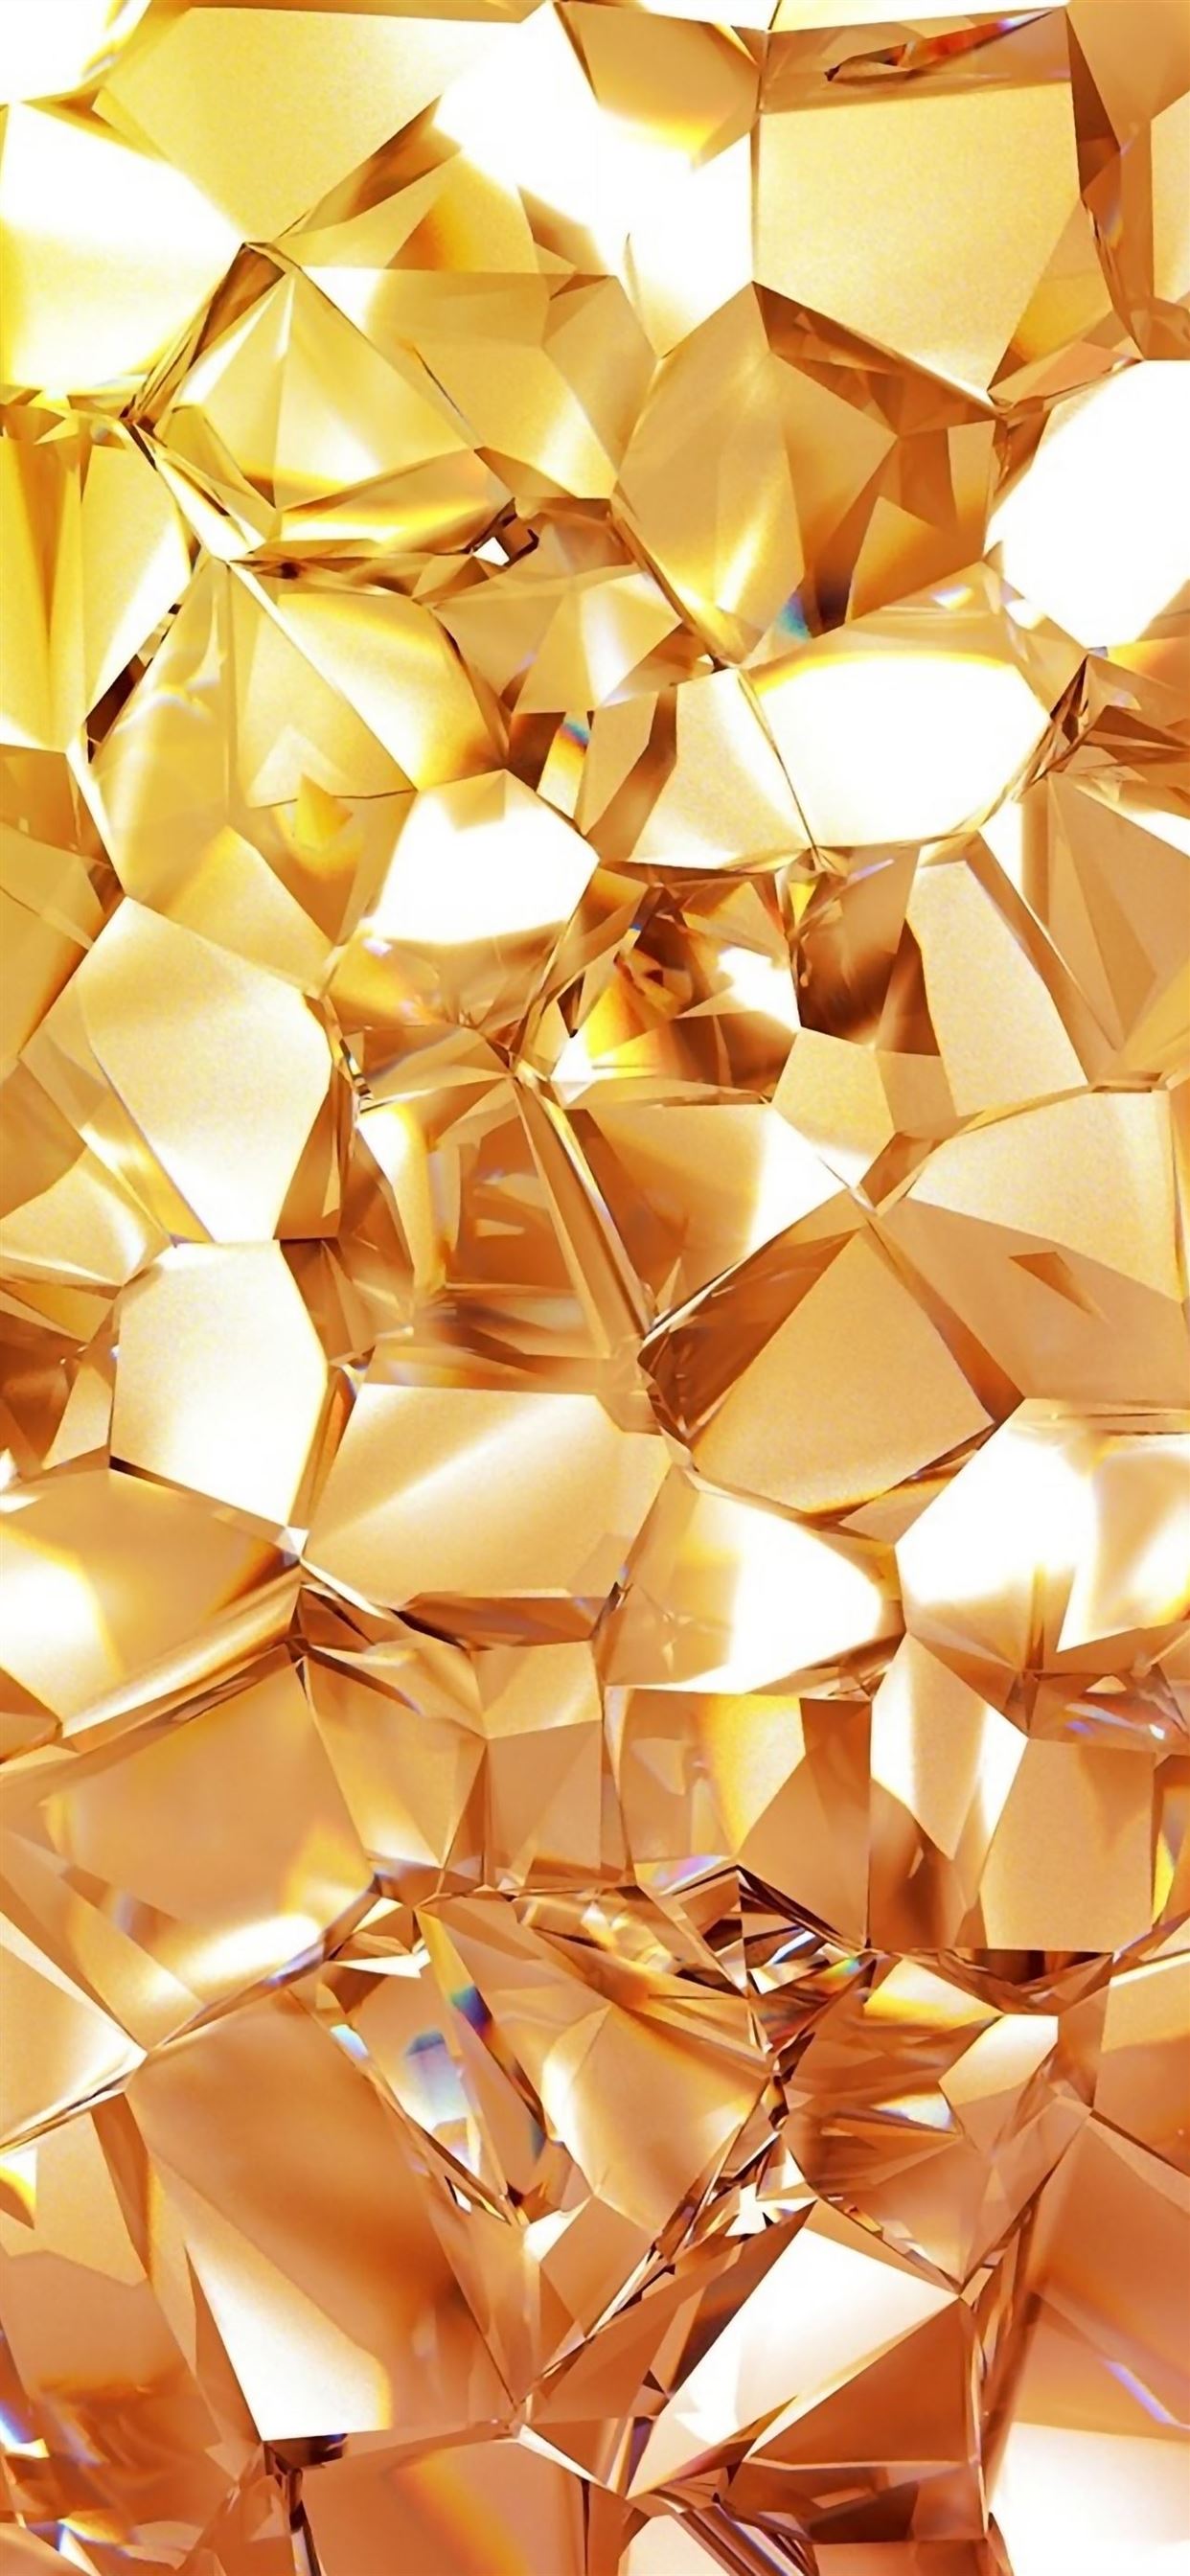 Geometric Gold Diamond Iphone Wallpapers Free Download